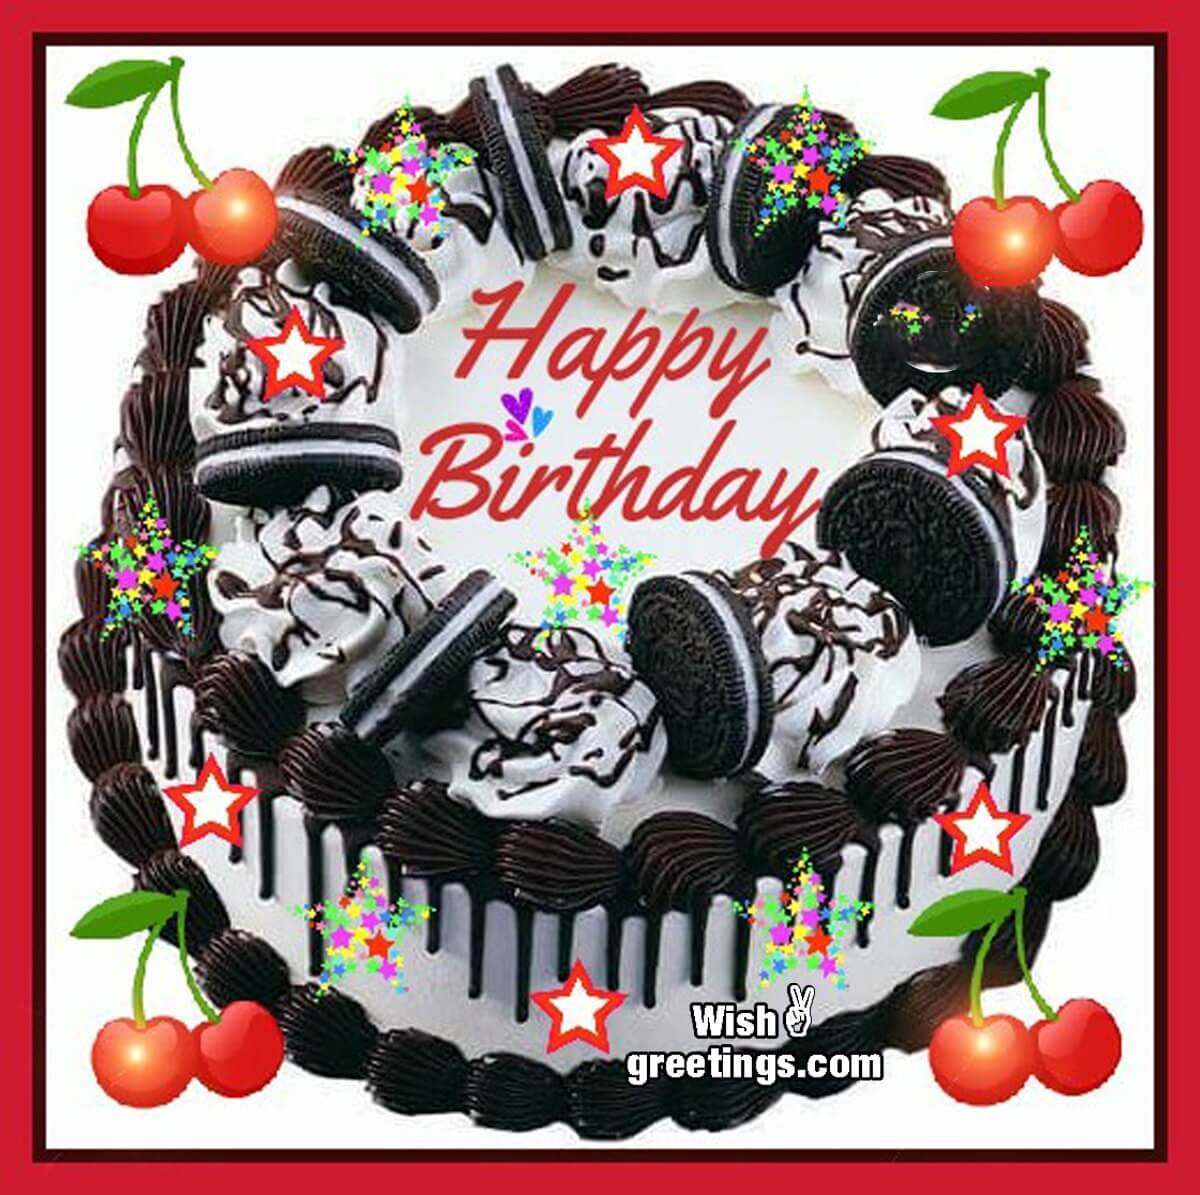 Happy Birthday Blackforest Cake